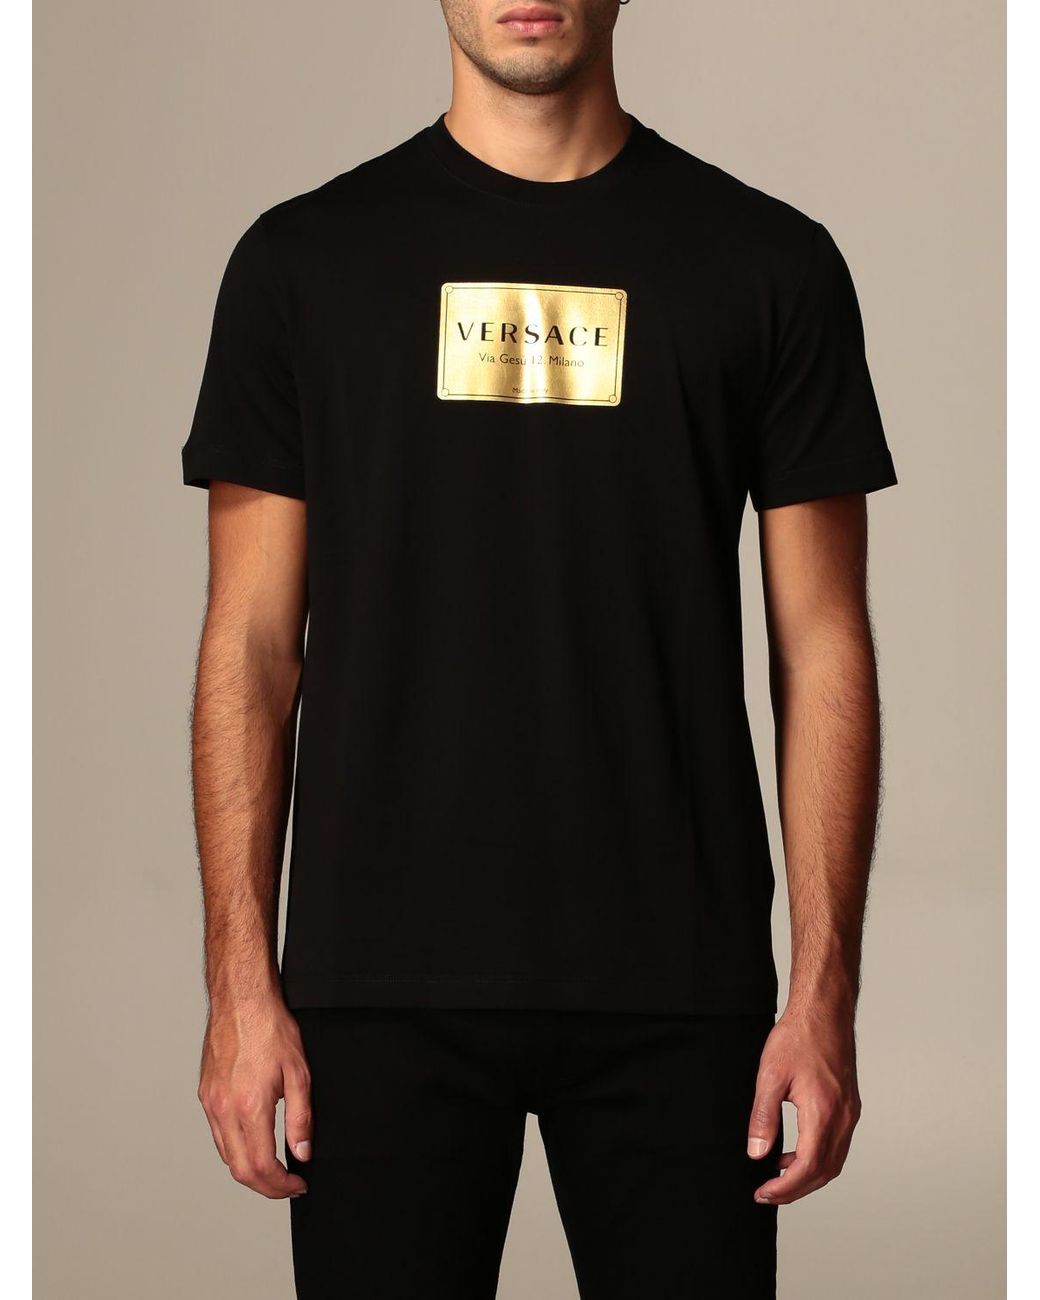 Versace T-shirt in Black for Men - Lyst